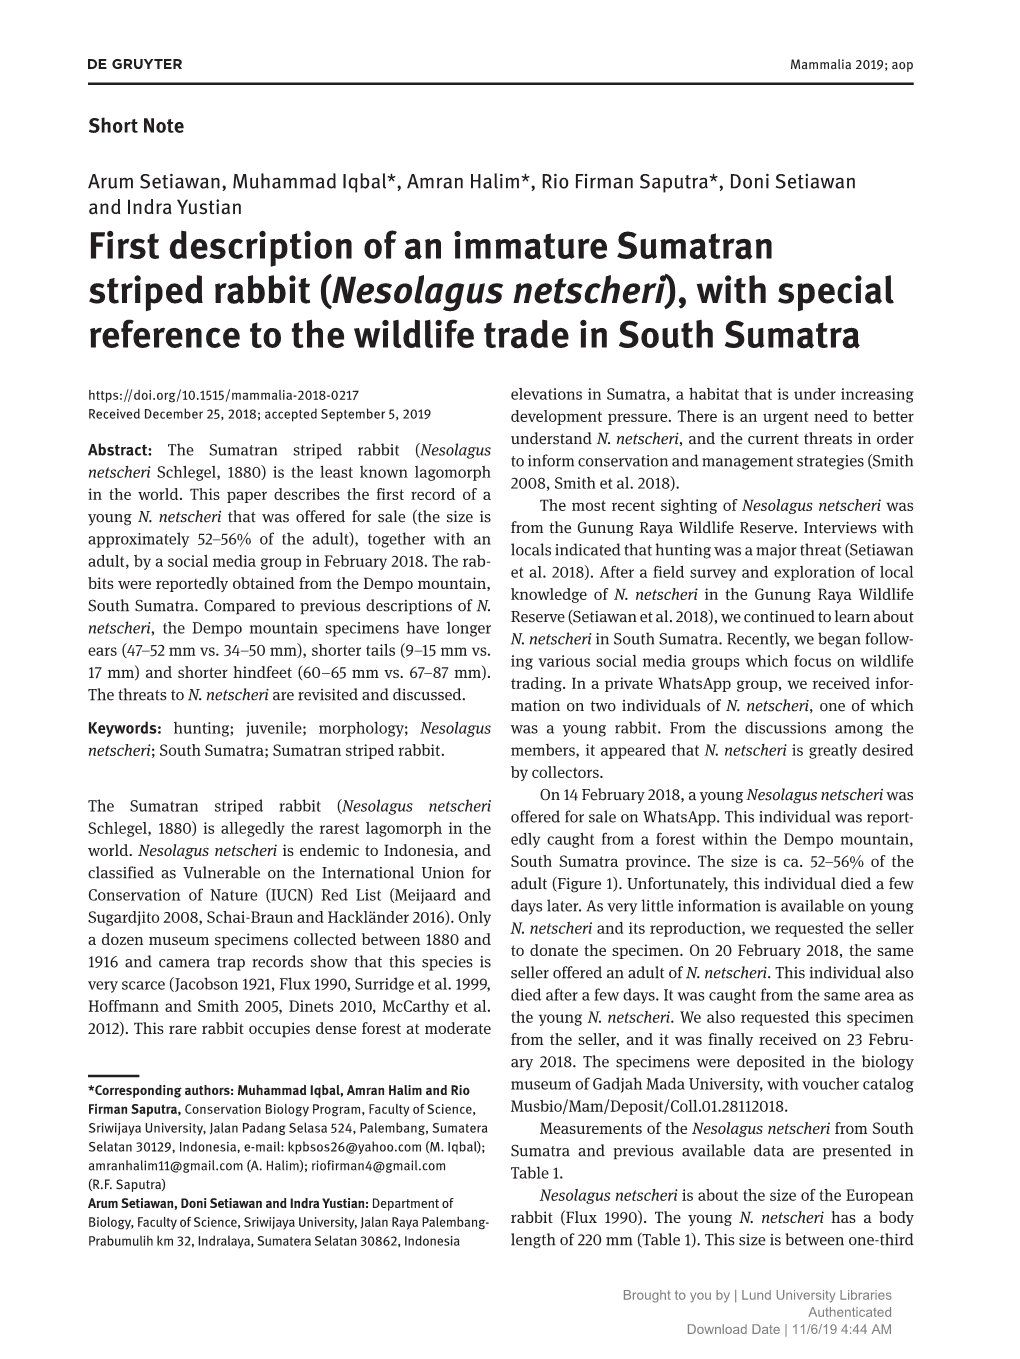 First Description of an Immature Sumatran Striped Rabbit (Nesolagus